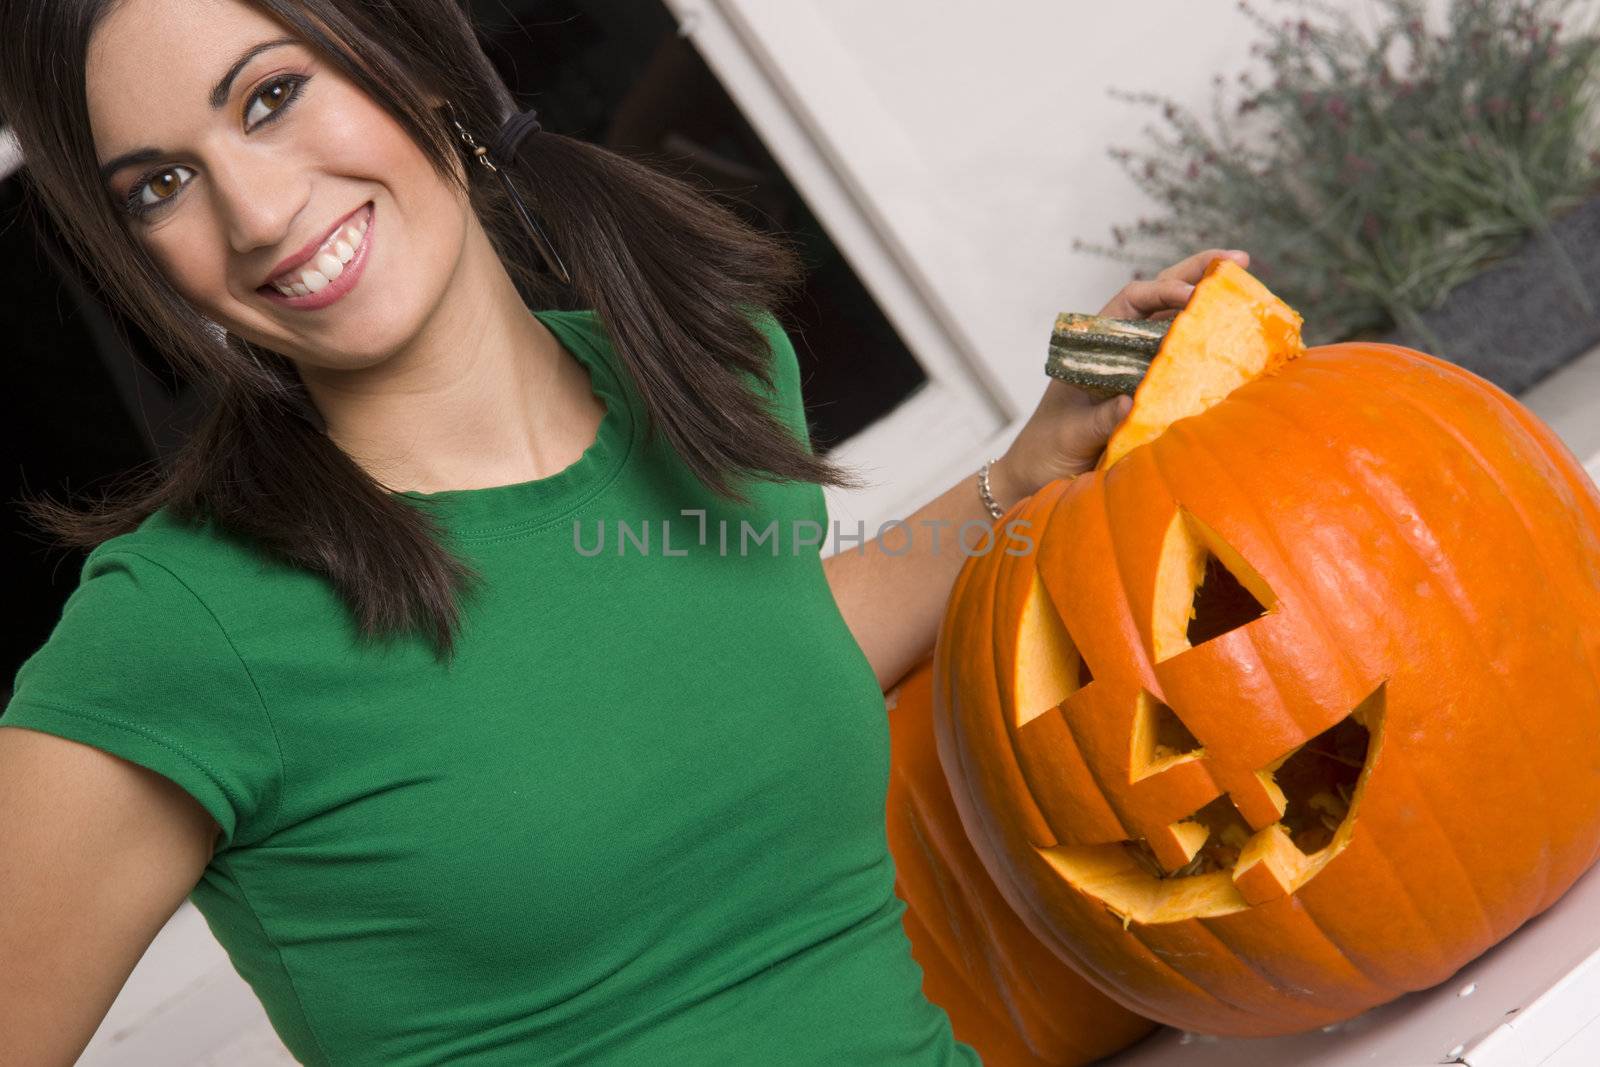 Joyful Woman at Halloween by ChrisBoswell